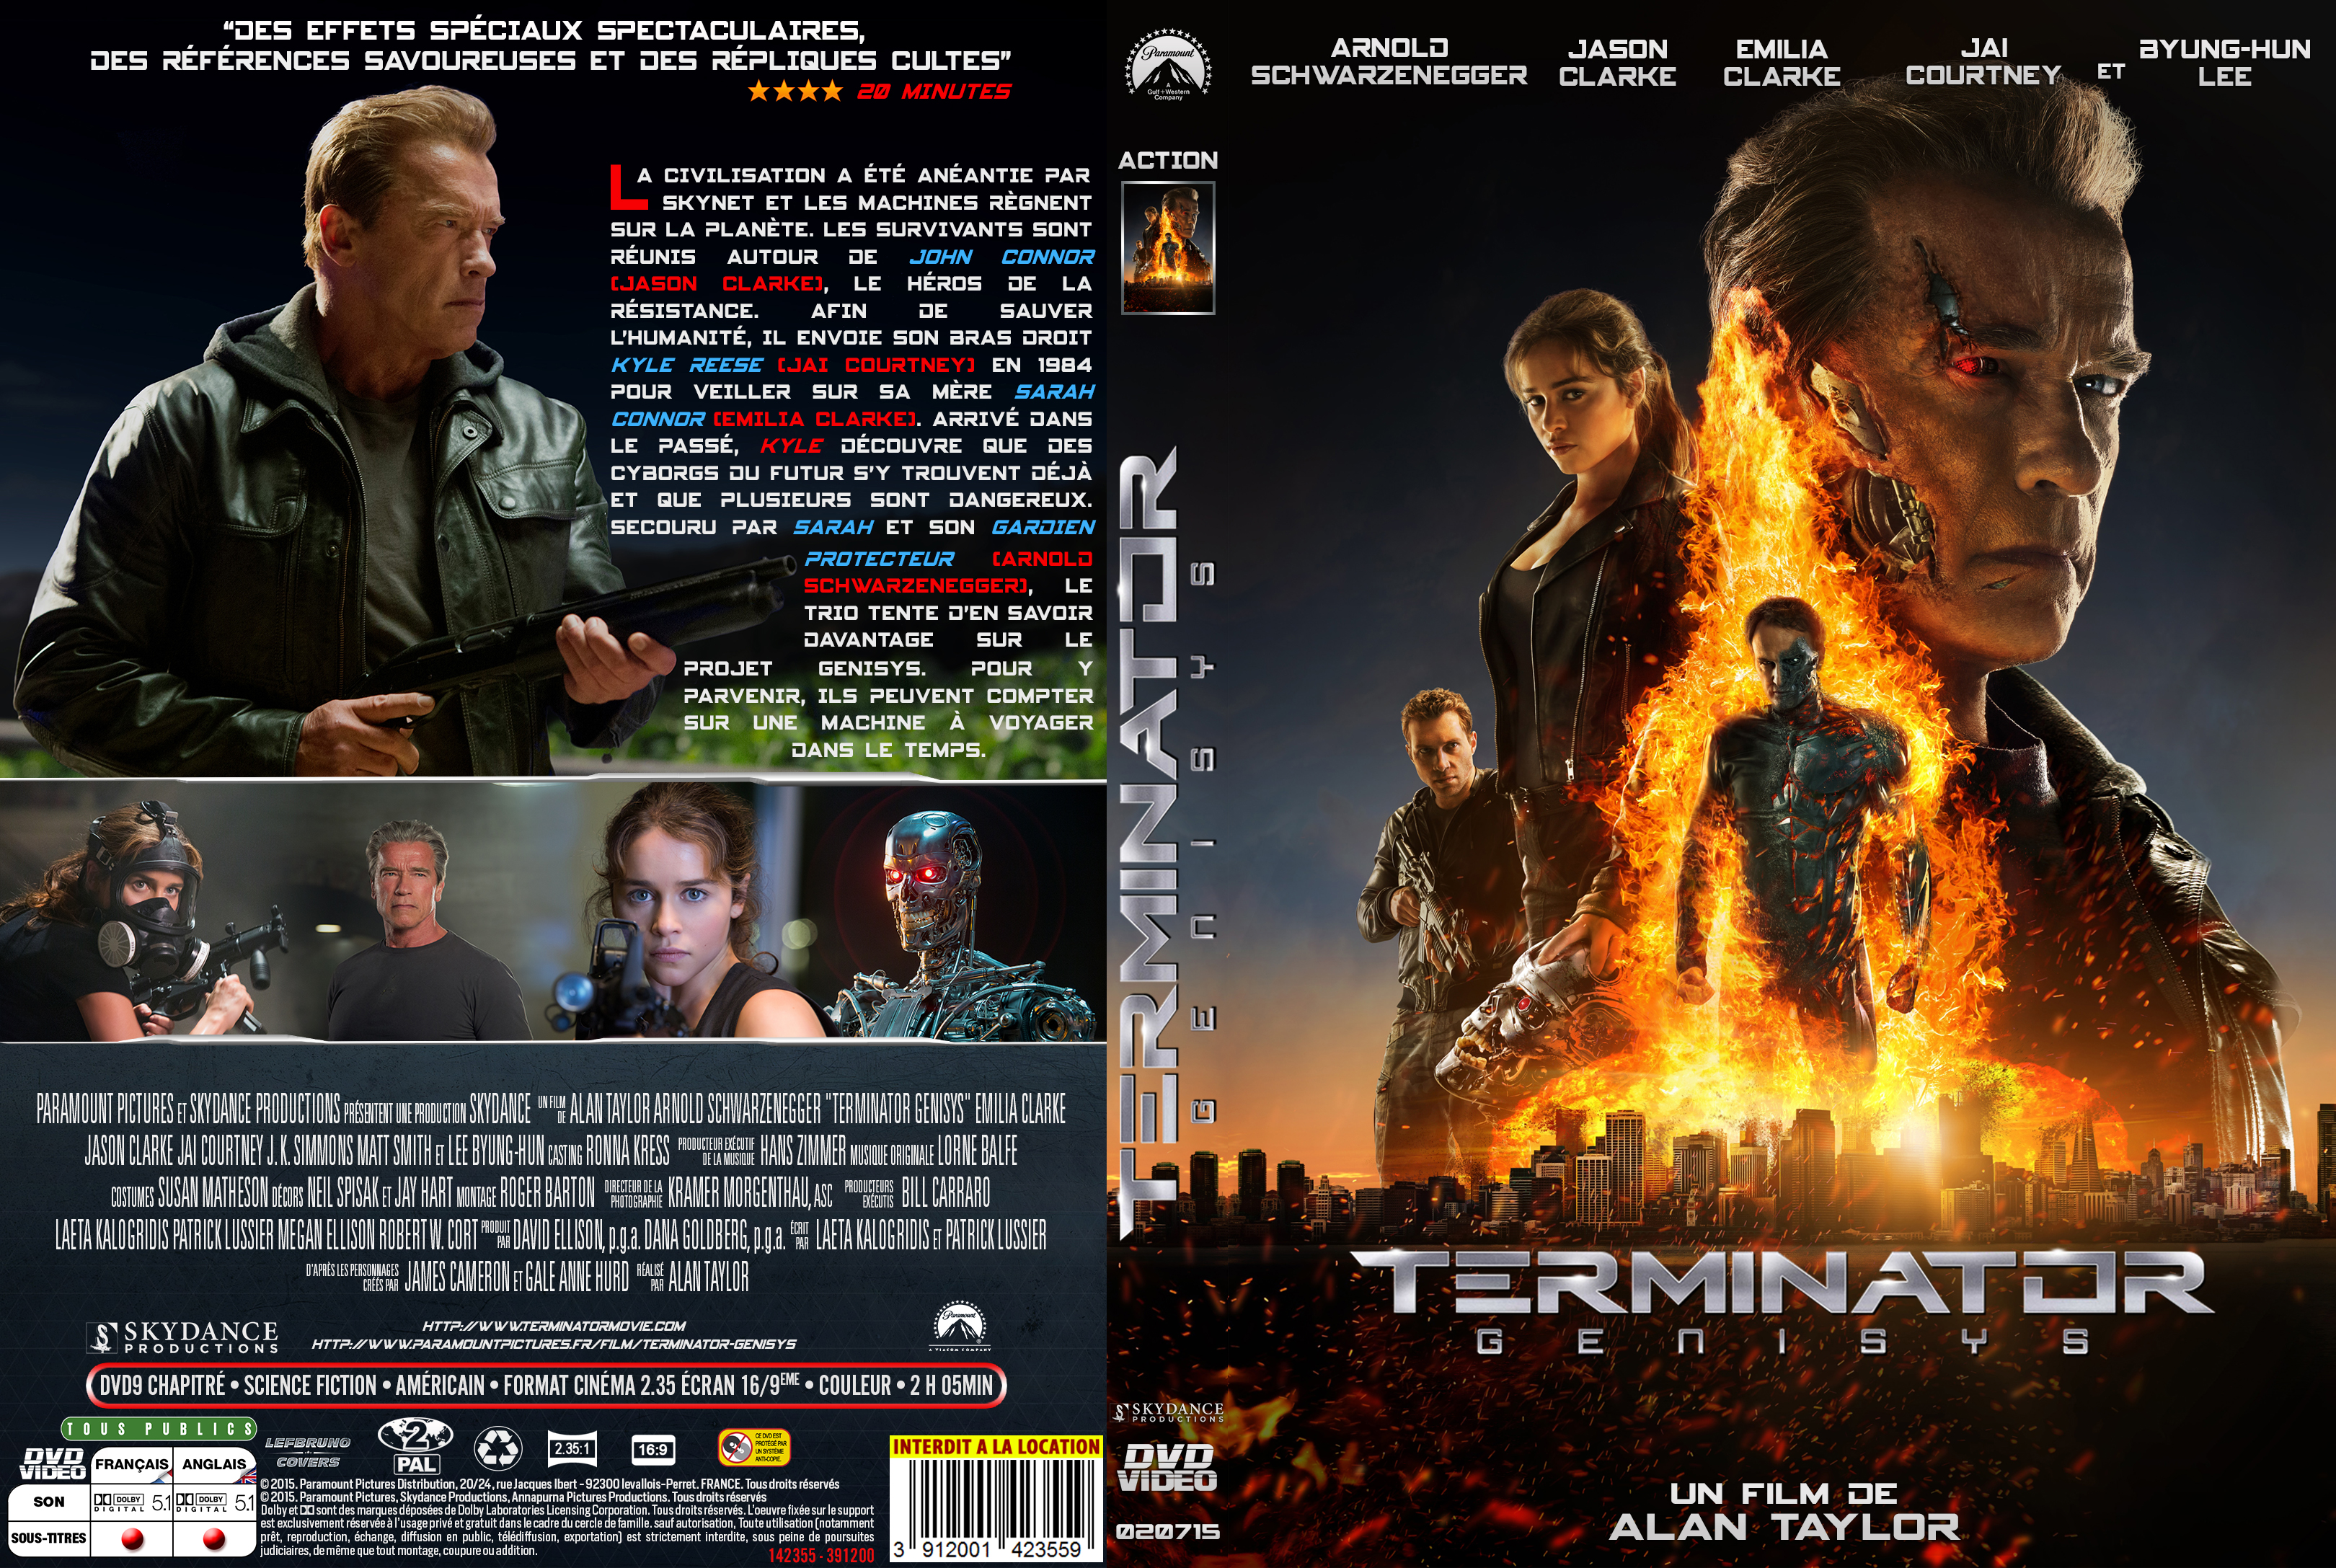 Jaquette DVD Terminator Genisys custom